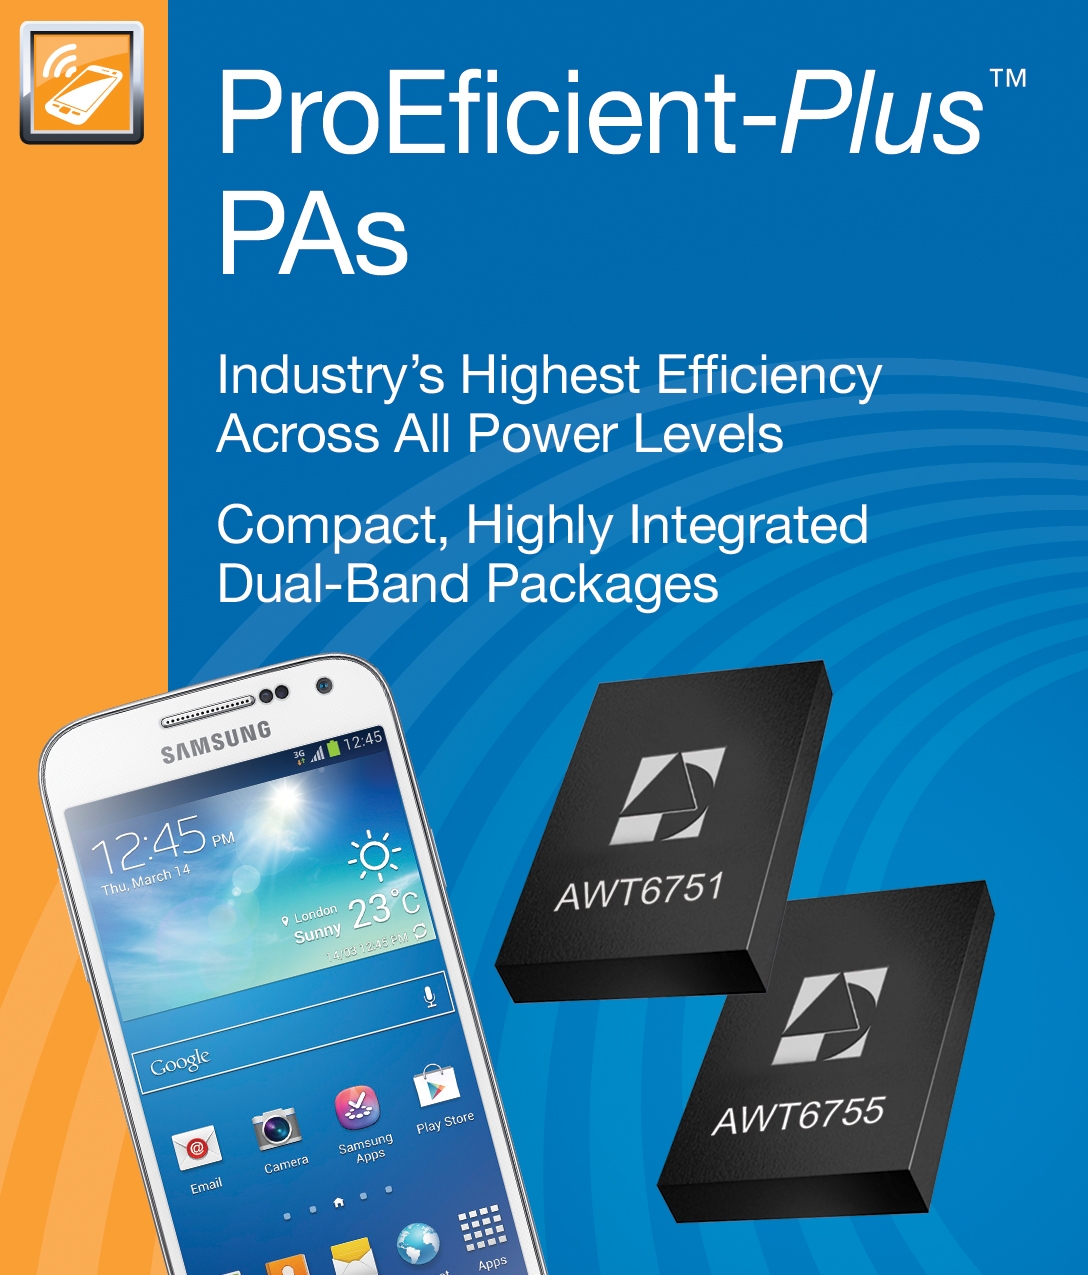 ANADIGICS ProEficient-Plus PAs Power Samsung Galaxy S 4 Mini